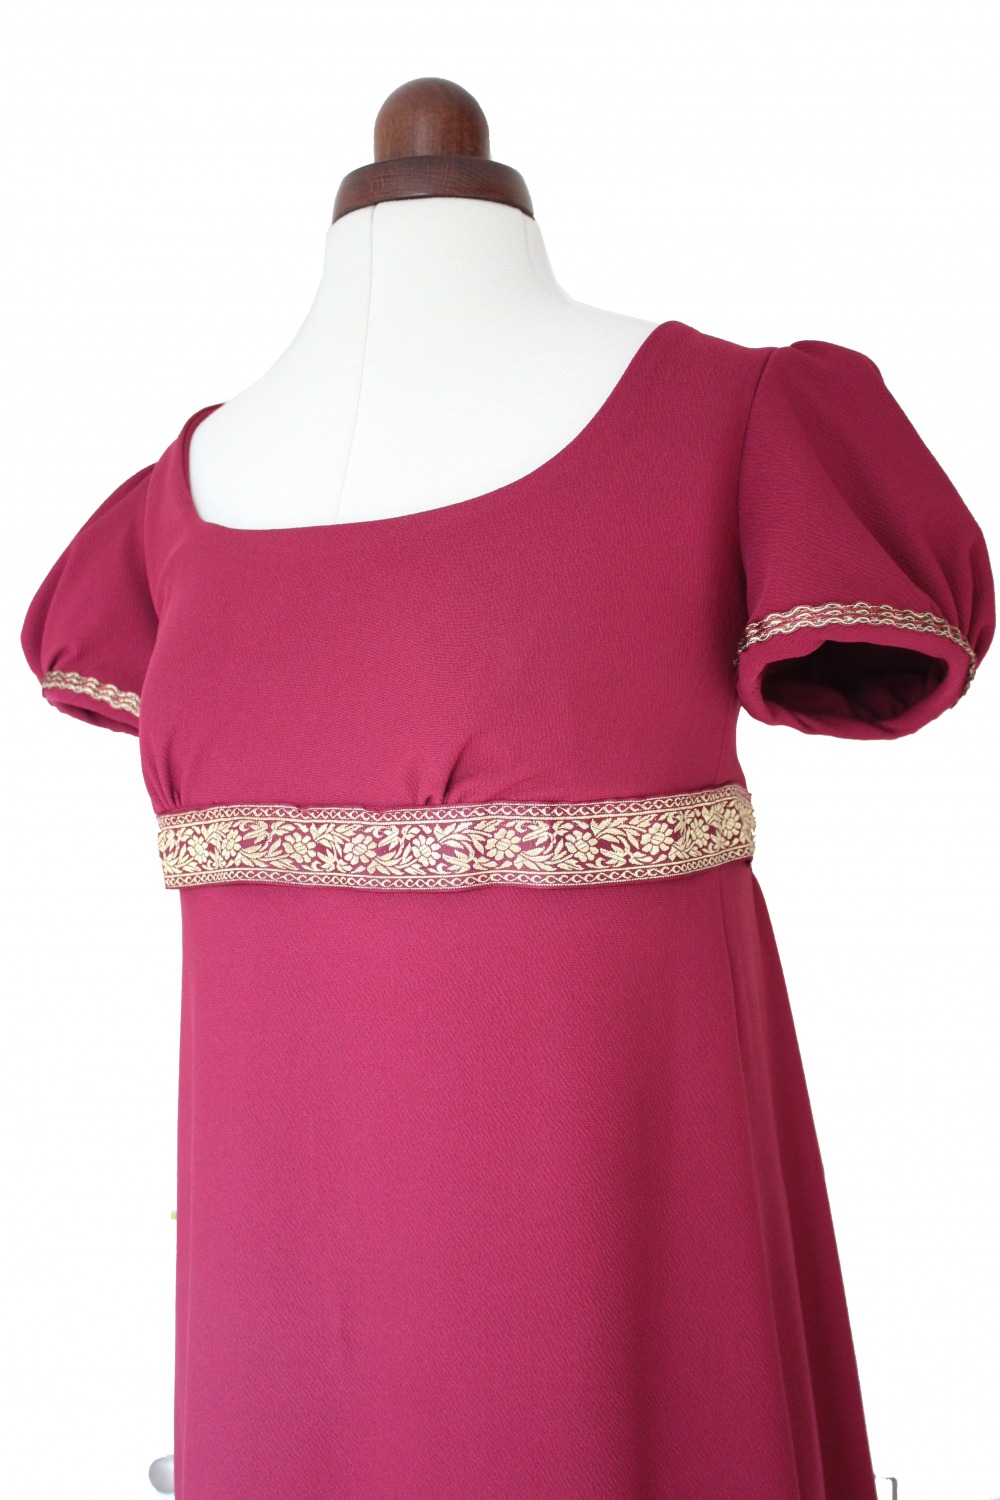 Ladies 18th 19th Century Regency Jane Austen Costume Evening Gown Size 8 - 10 Image